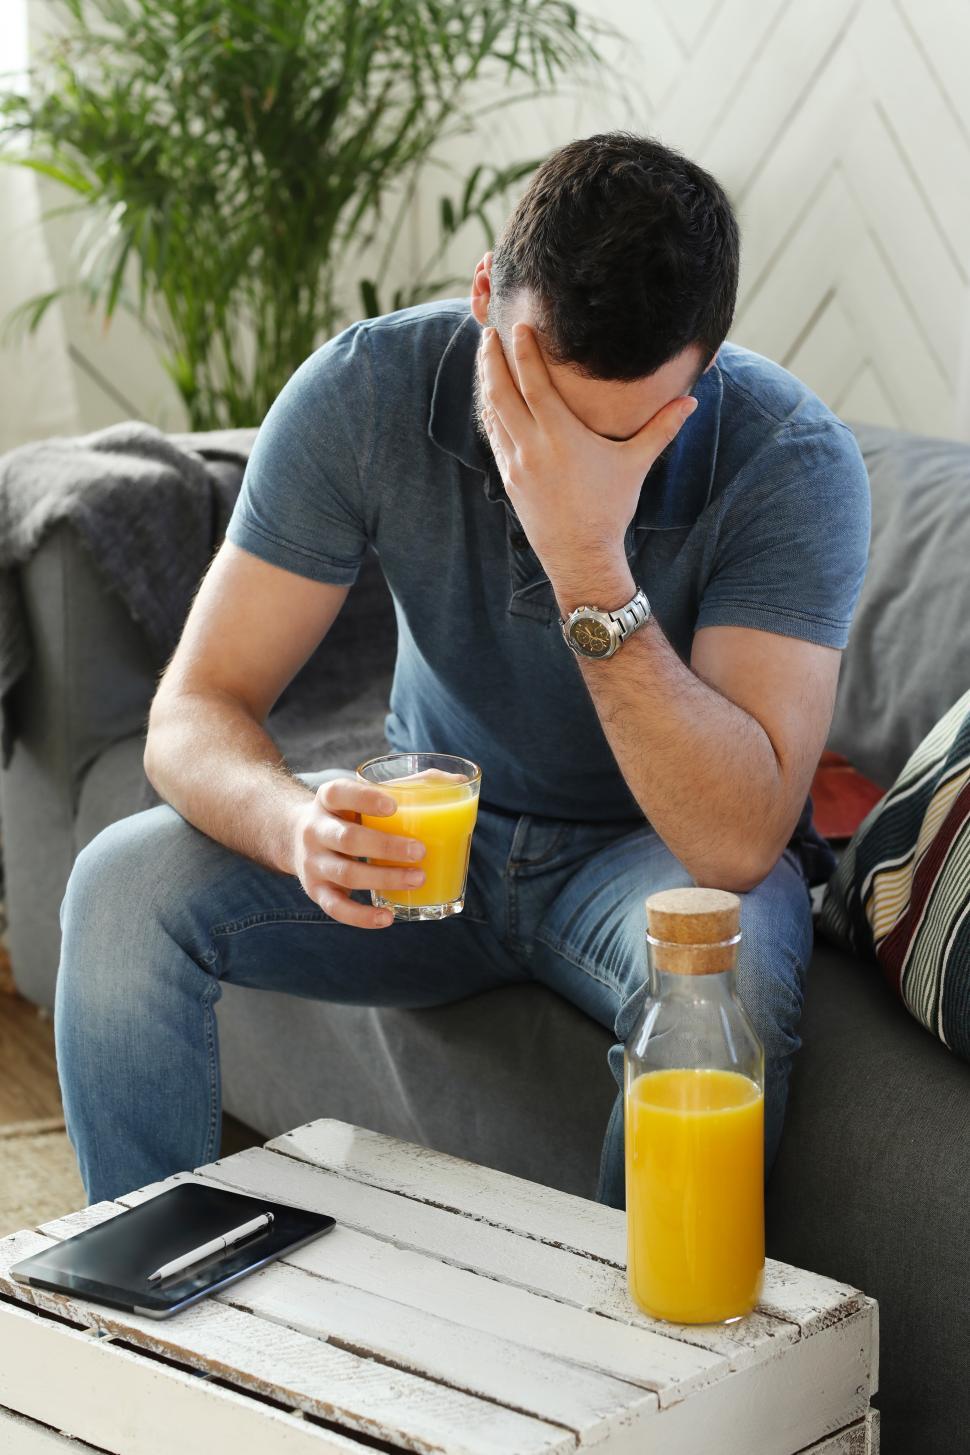 Free Image of Man with orange juice seems troubled 